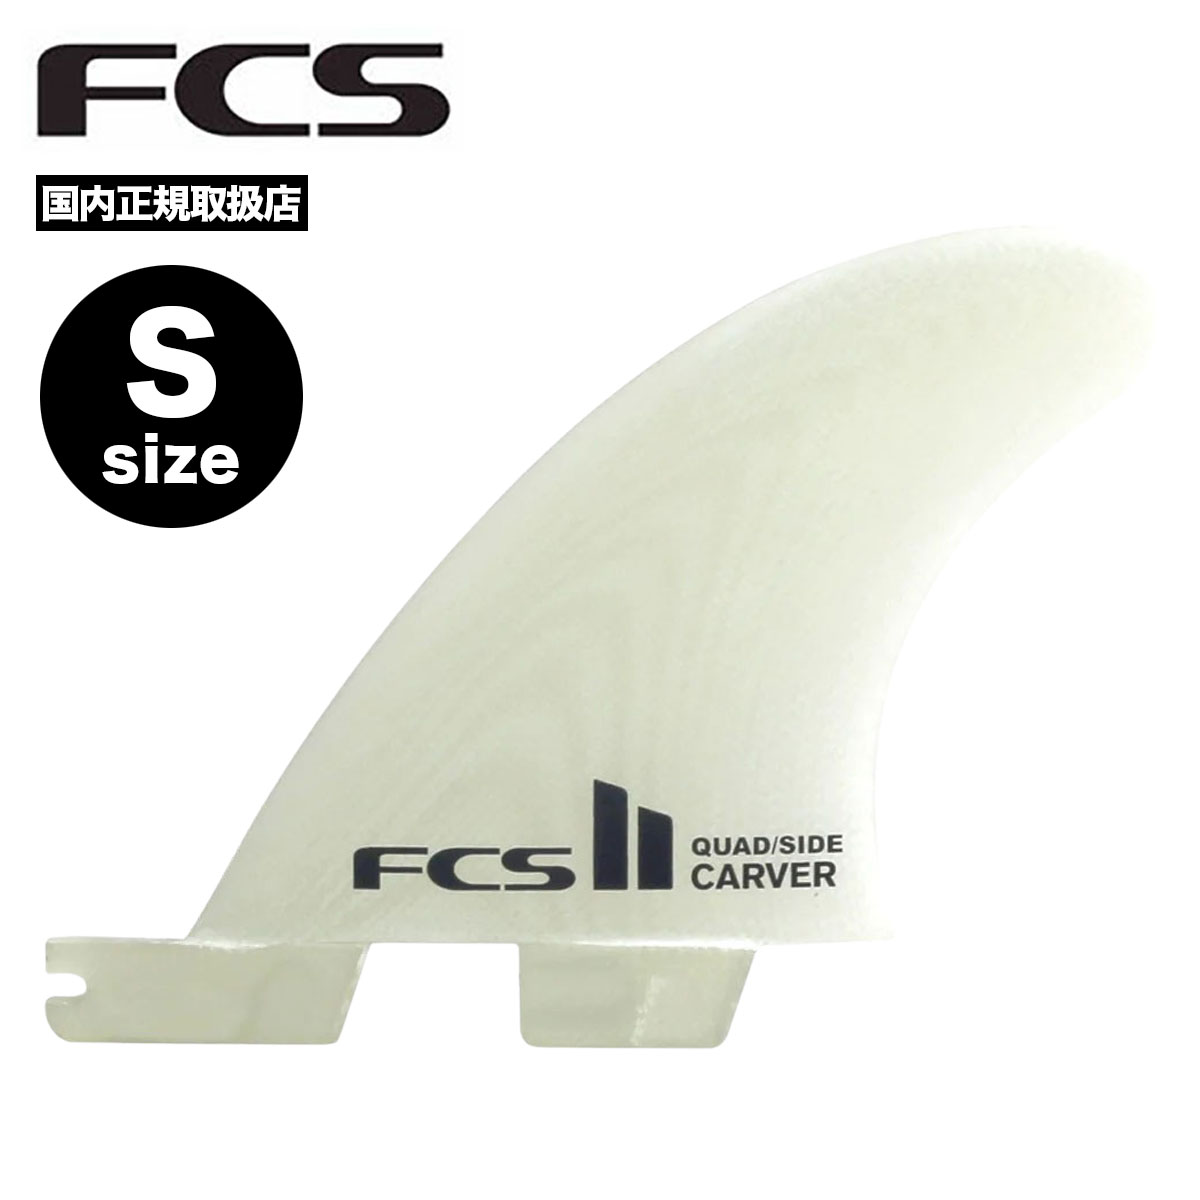 FCS2 フィン CARVER PC TRI FIN Mサイズ - その他スポーツ